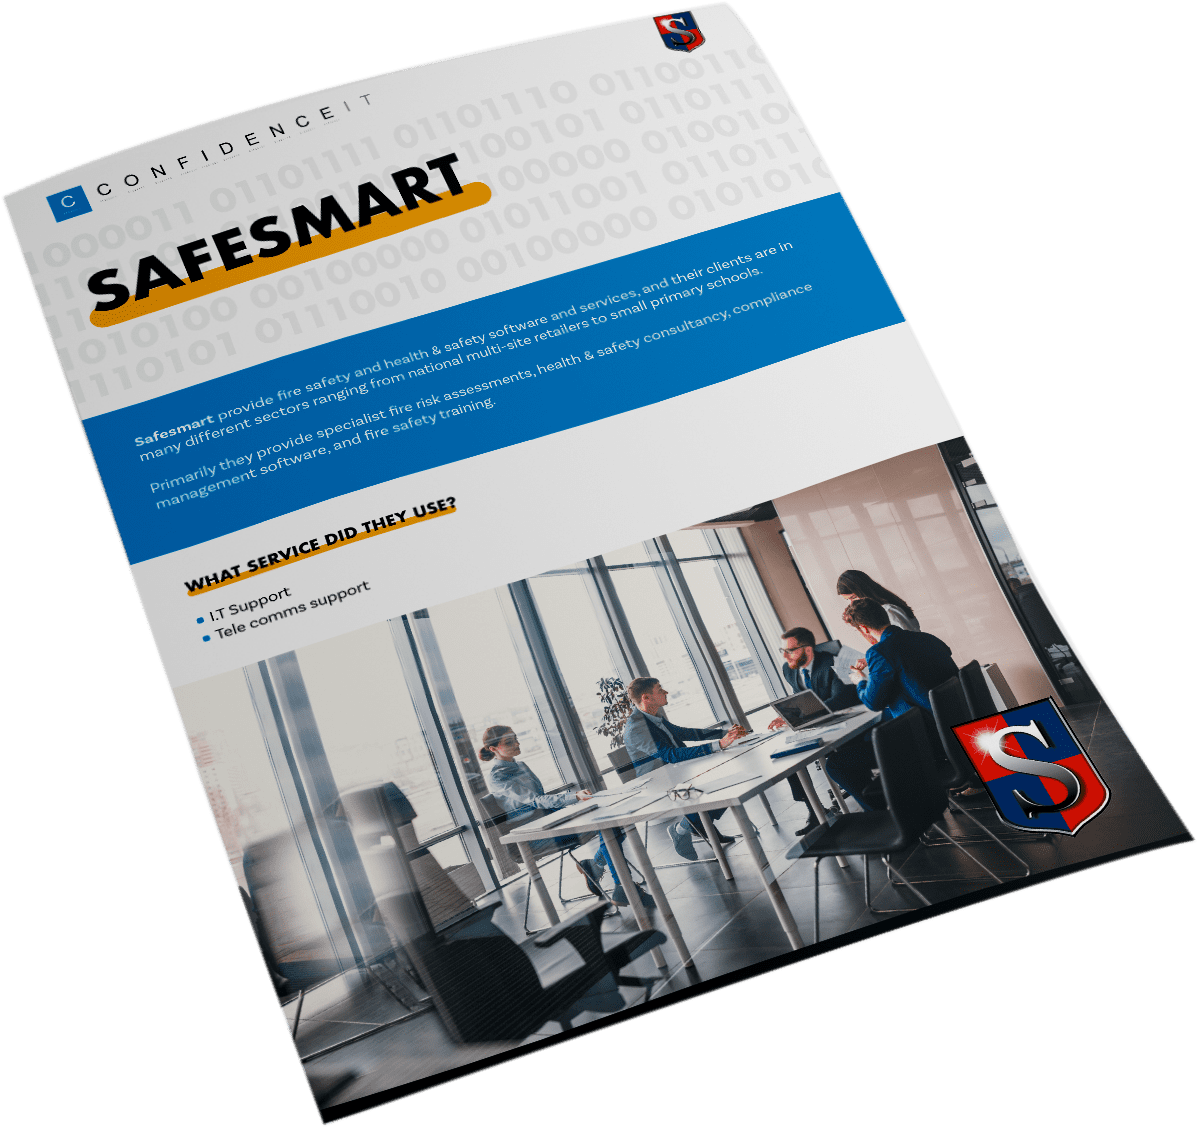 Safesmart | Confidence IT